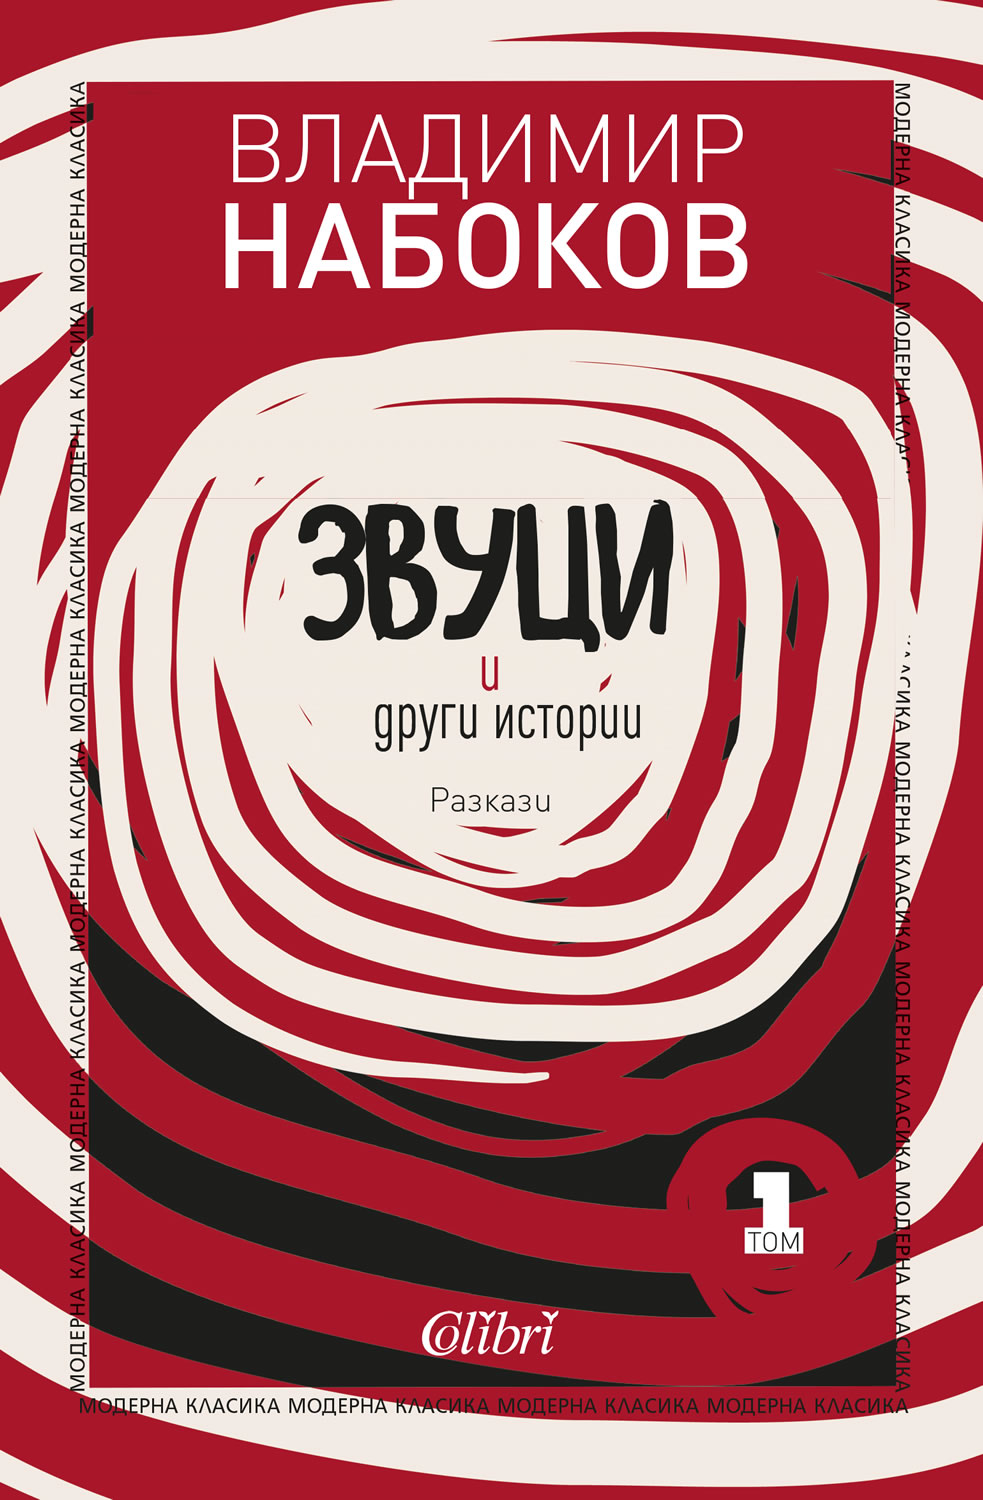 Владимир Набоков: "Звуци и други истории"